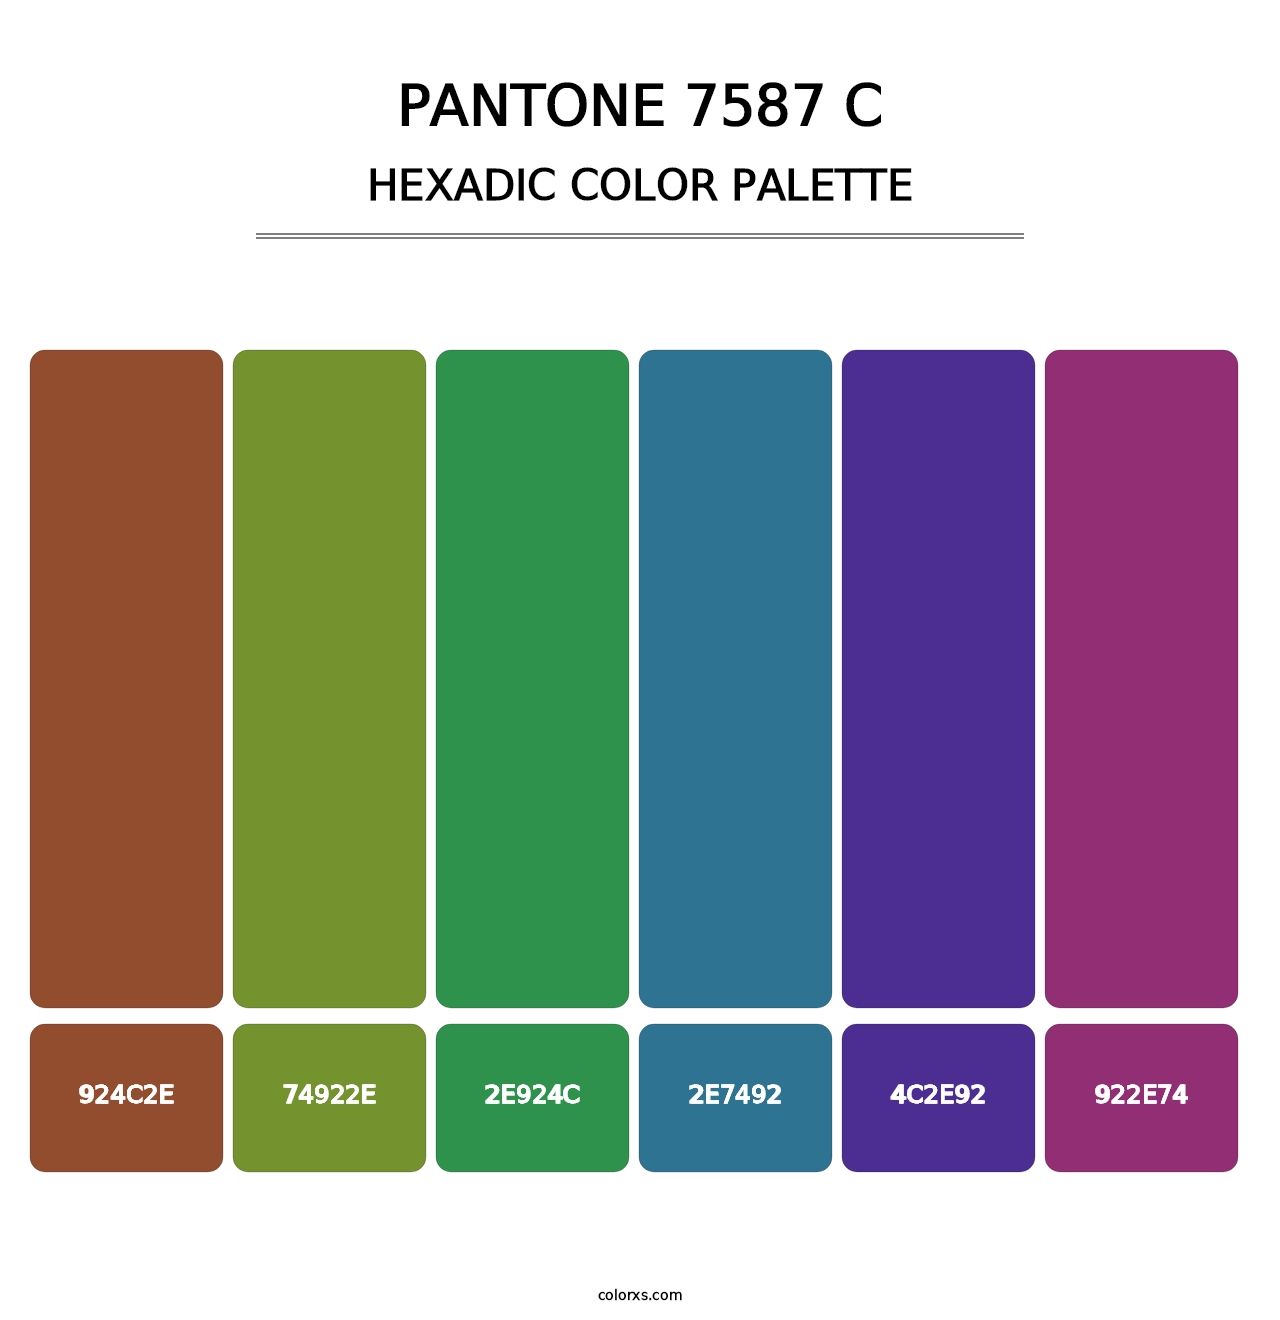 PANTONE 7587 C - Hexadic Color Palette